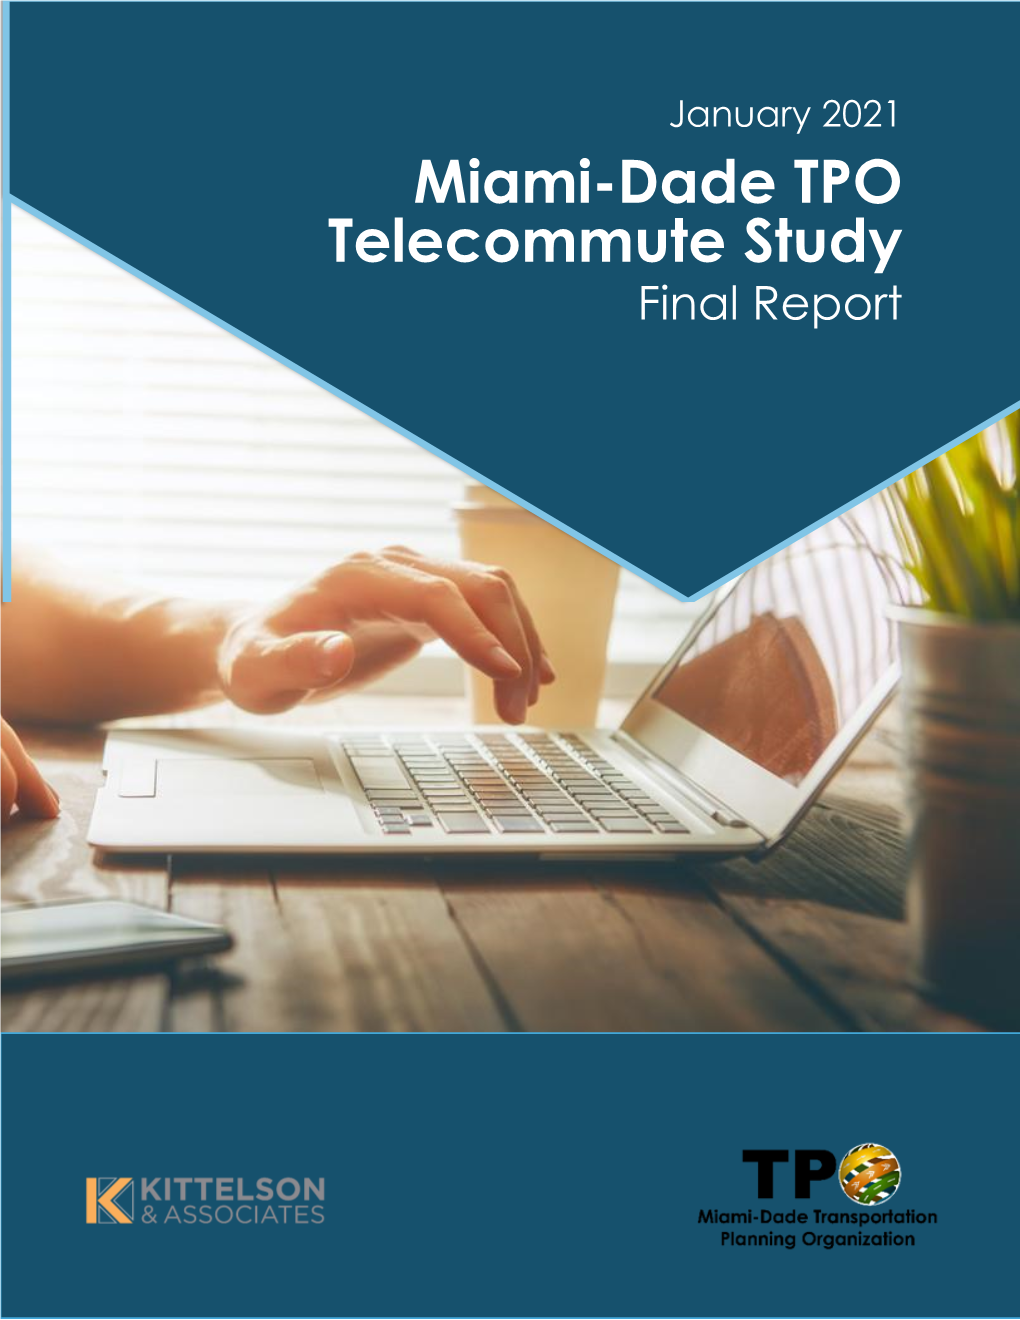 Miami-Dade TPO Telecommute Study Final Report, January 2021